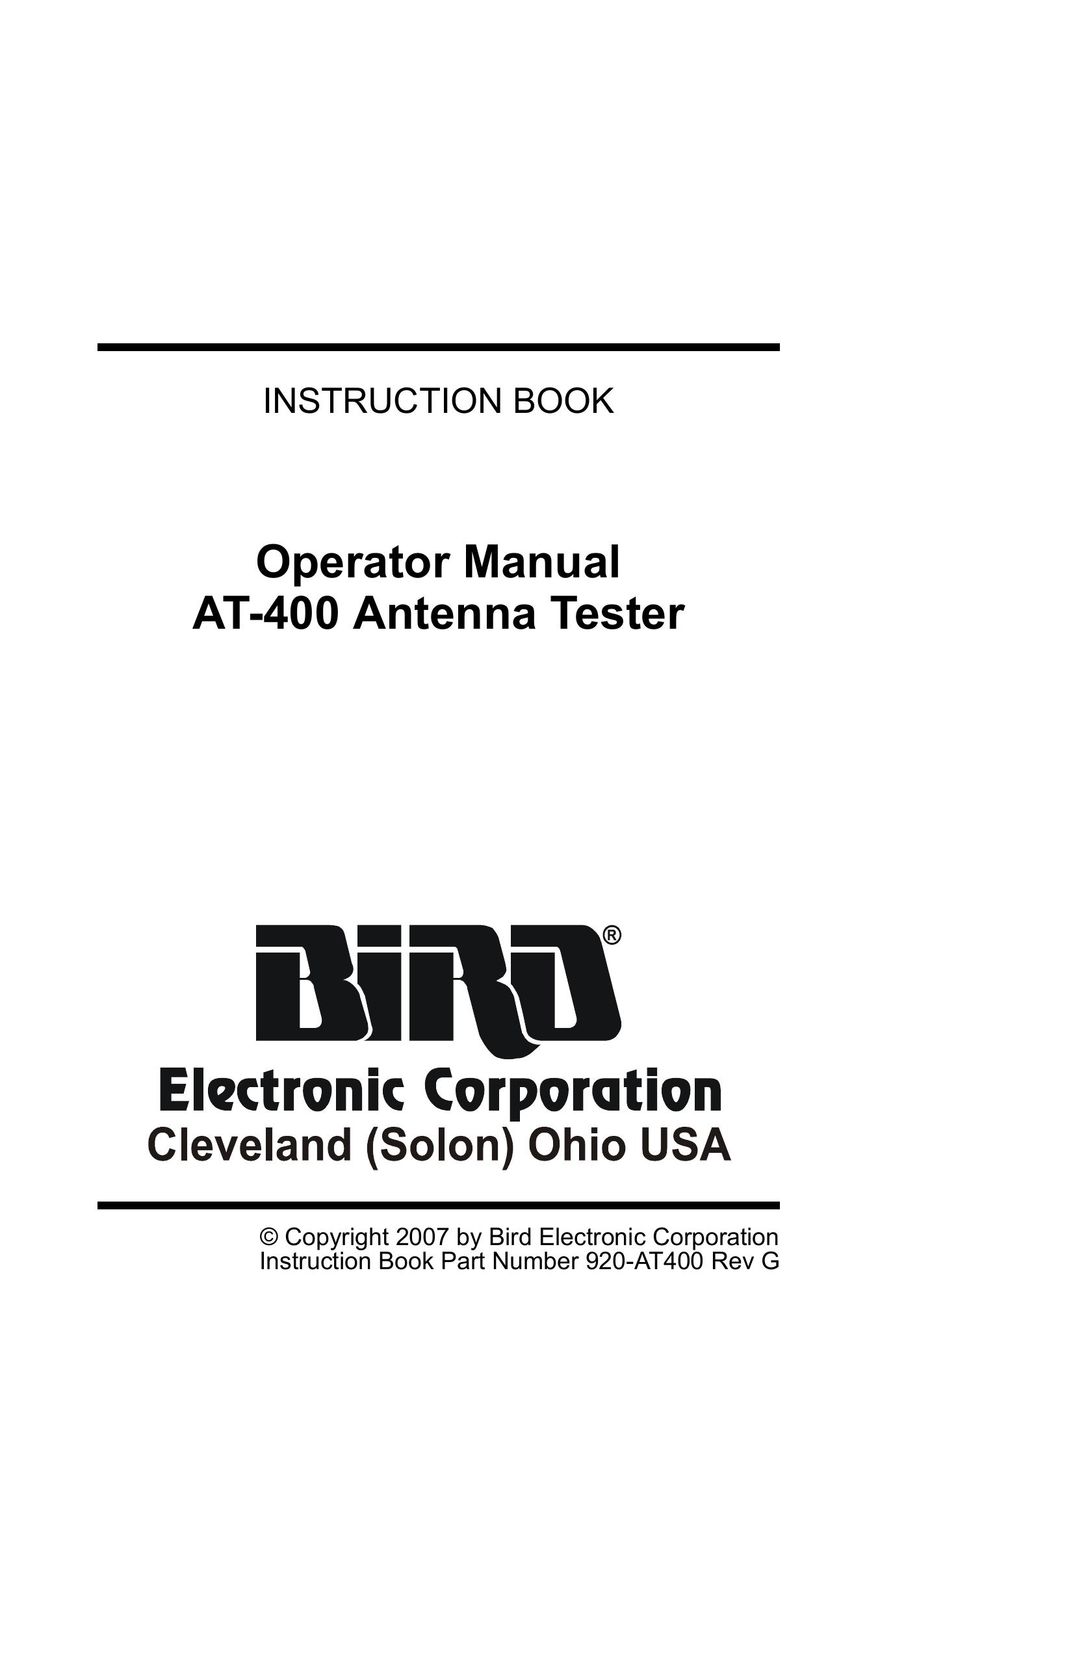 Bird Brain AT-400 Stereo System User Manual